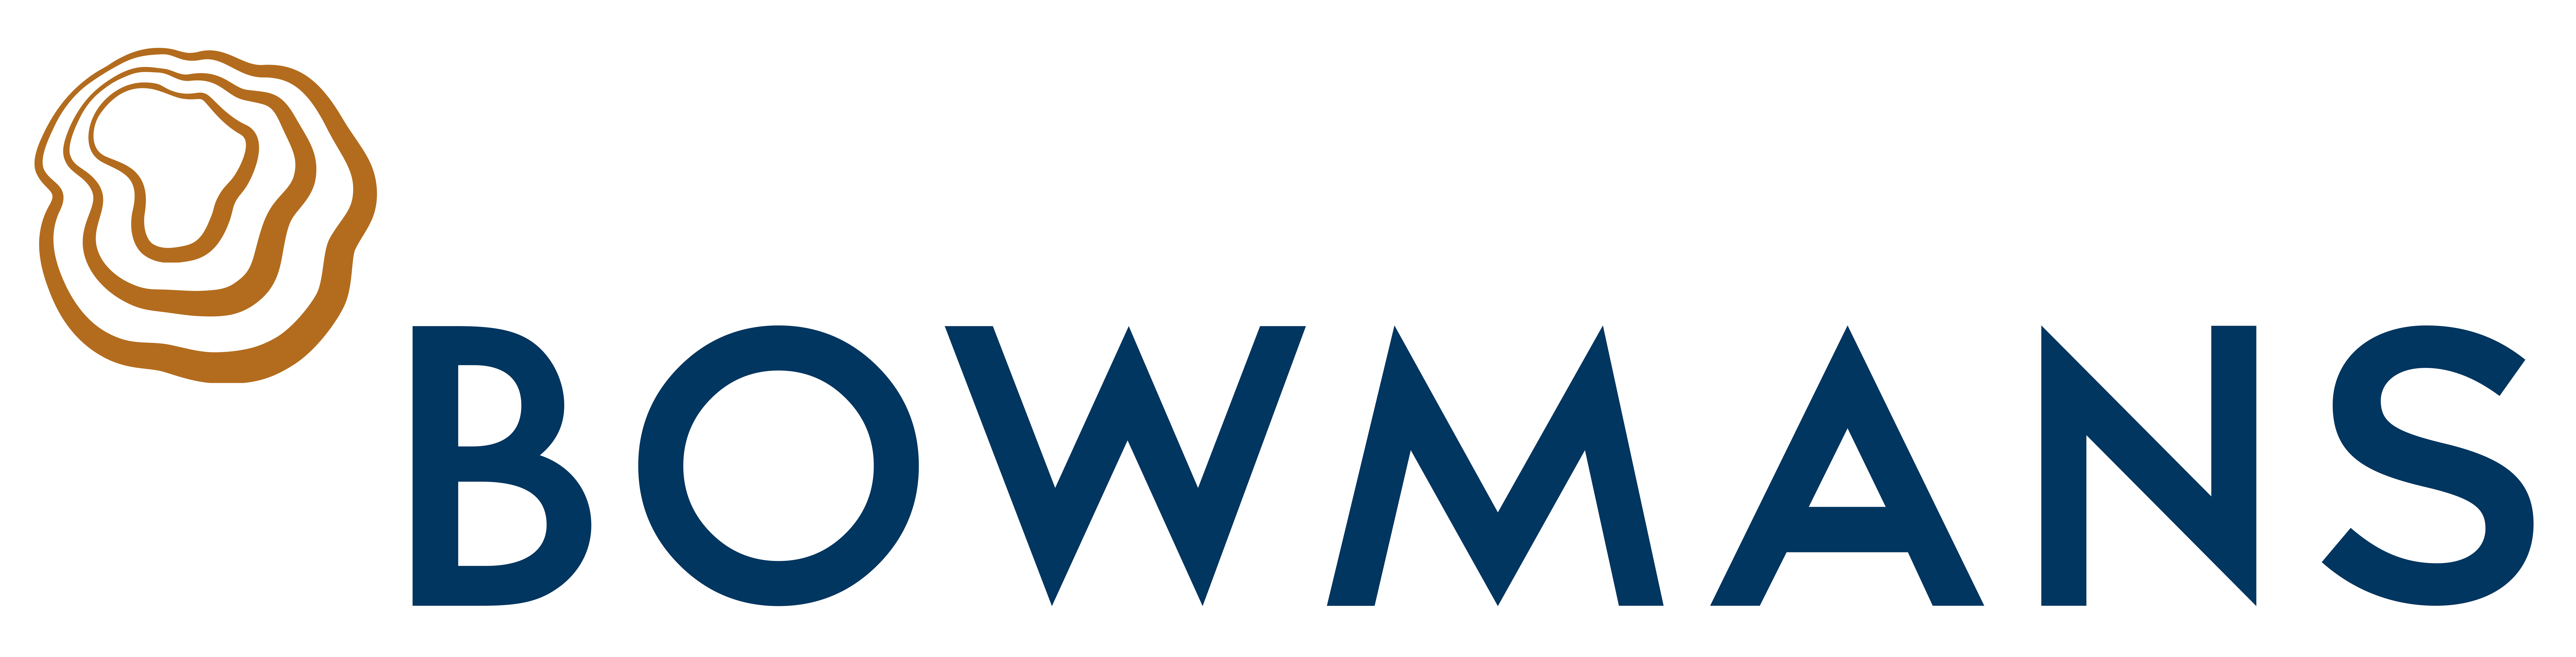 Bowmans Mauritius company logo